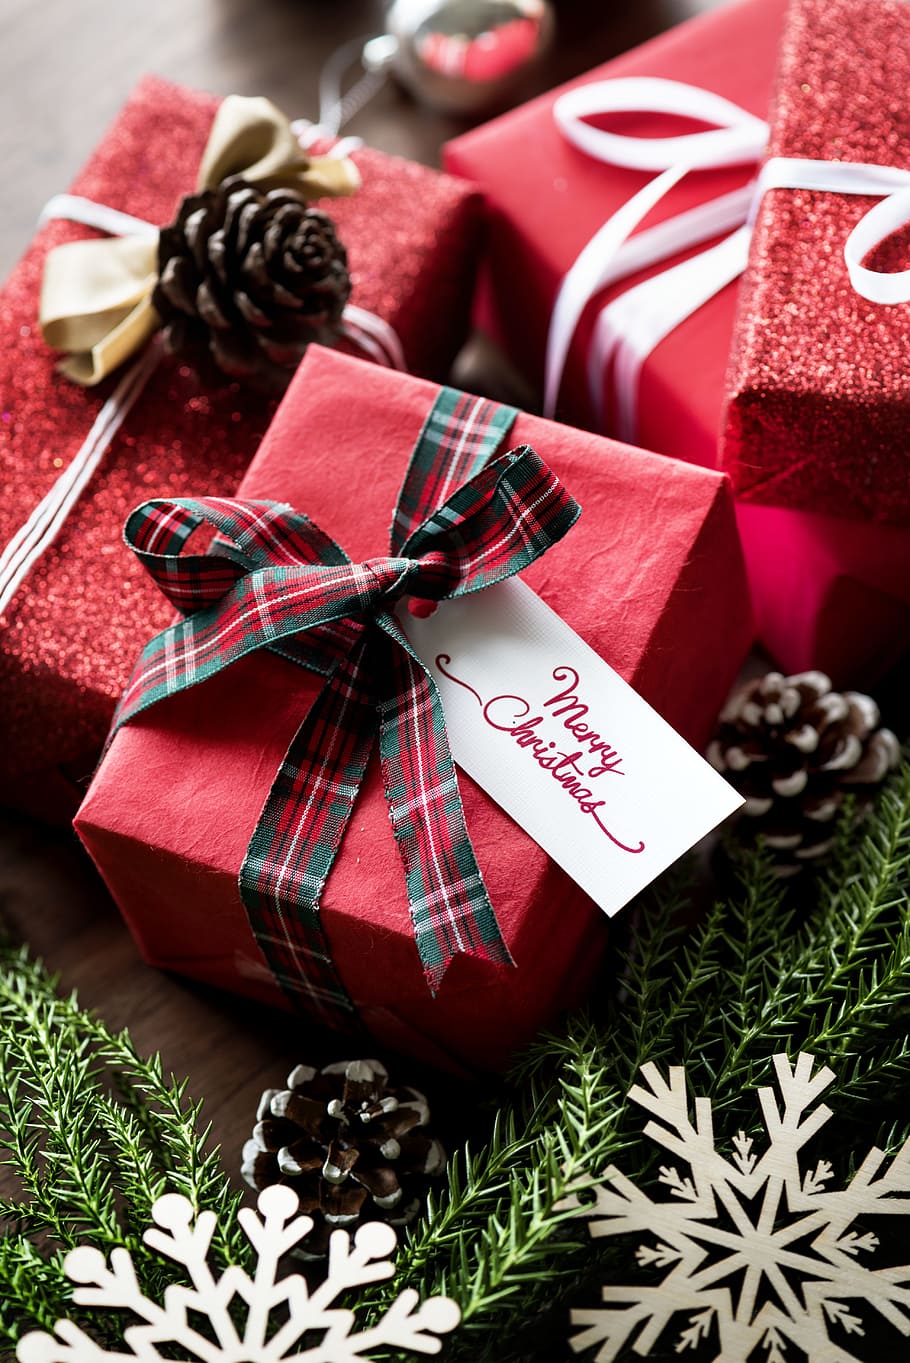 box, card, celebrate, celebration, christmas, decorate, decoration, festival, festive, gift